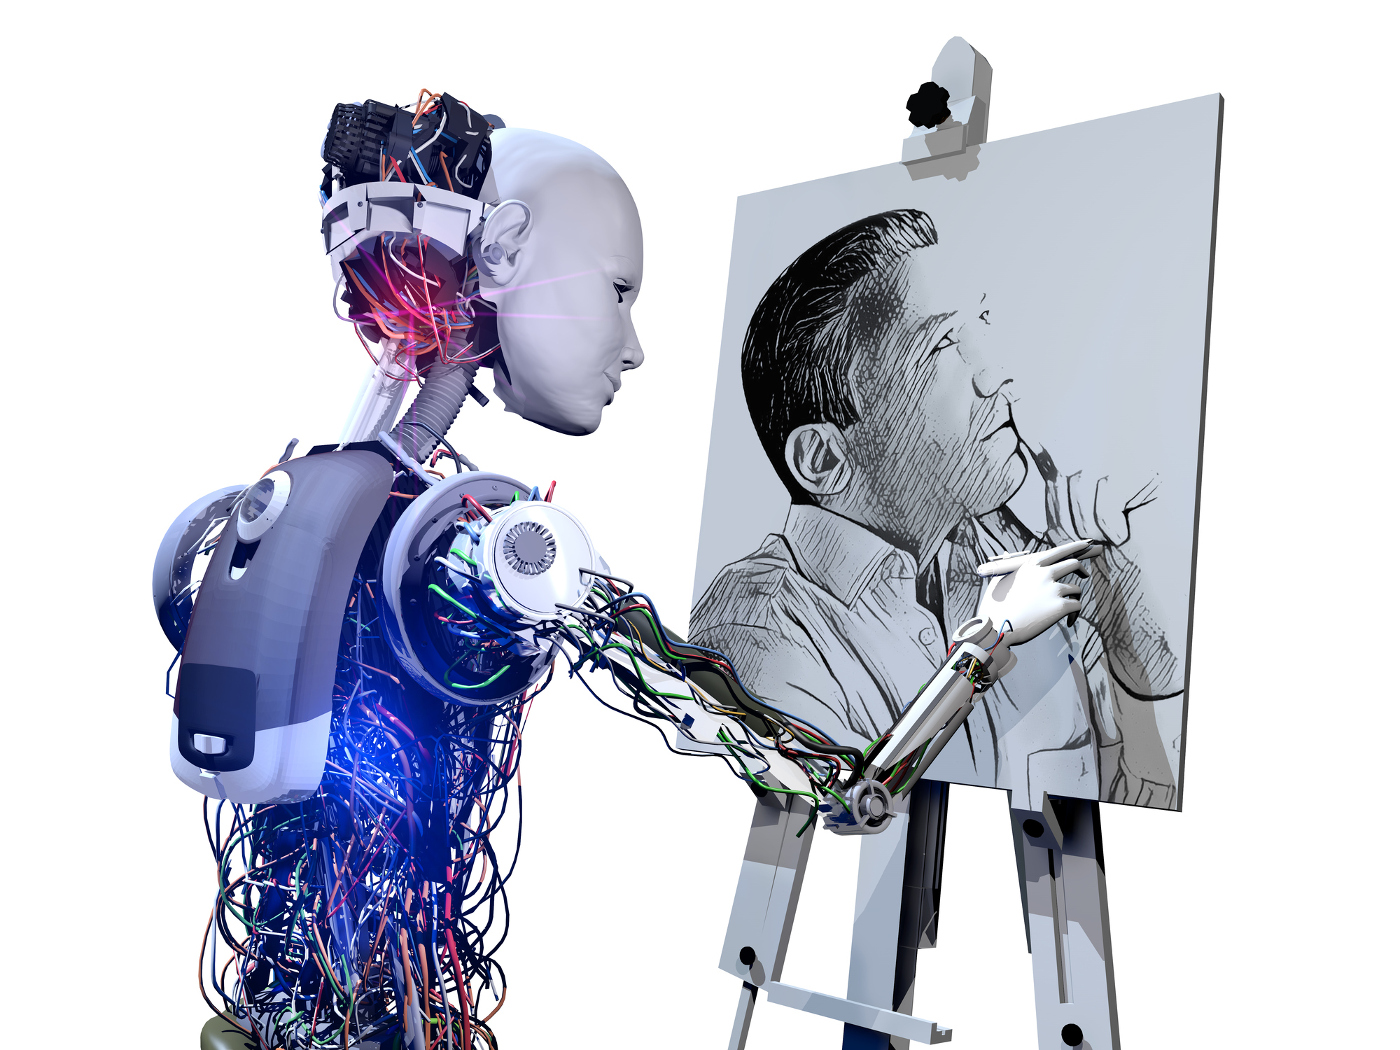 When artificial intelligence meets art | Tendercapital